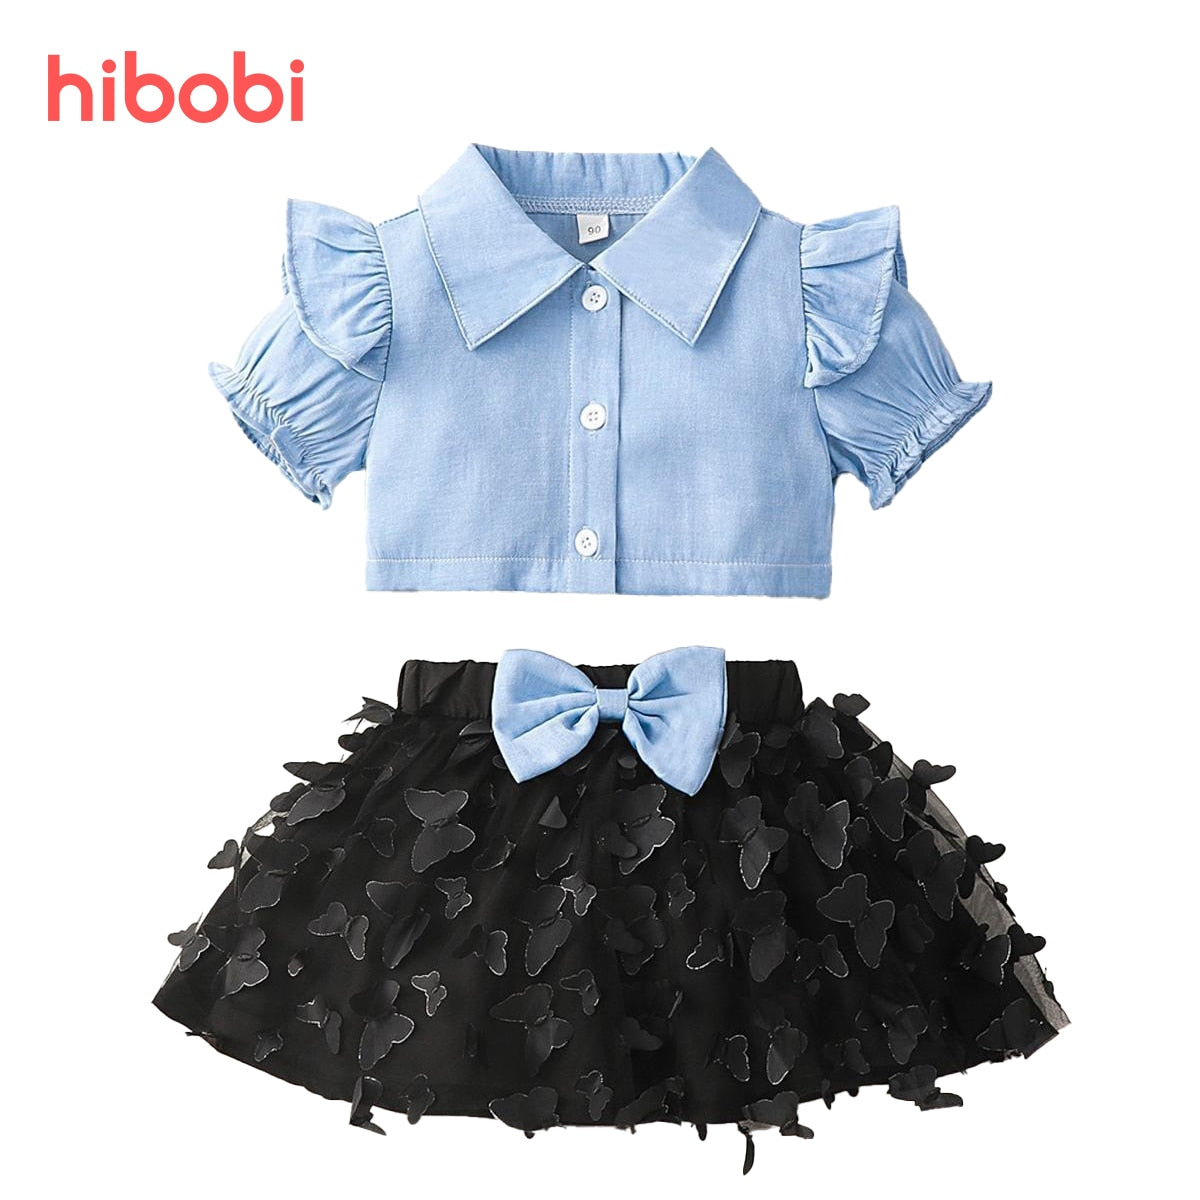 hibobi Baby Girl Summer Clothing Sets Baby Girls Clothes Shirt Top +Tutu Skirts 2pcs Outfits Sets 0-6T